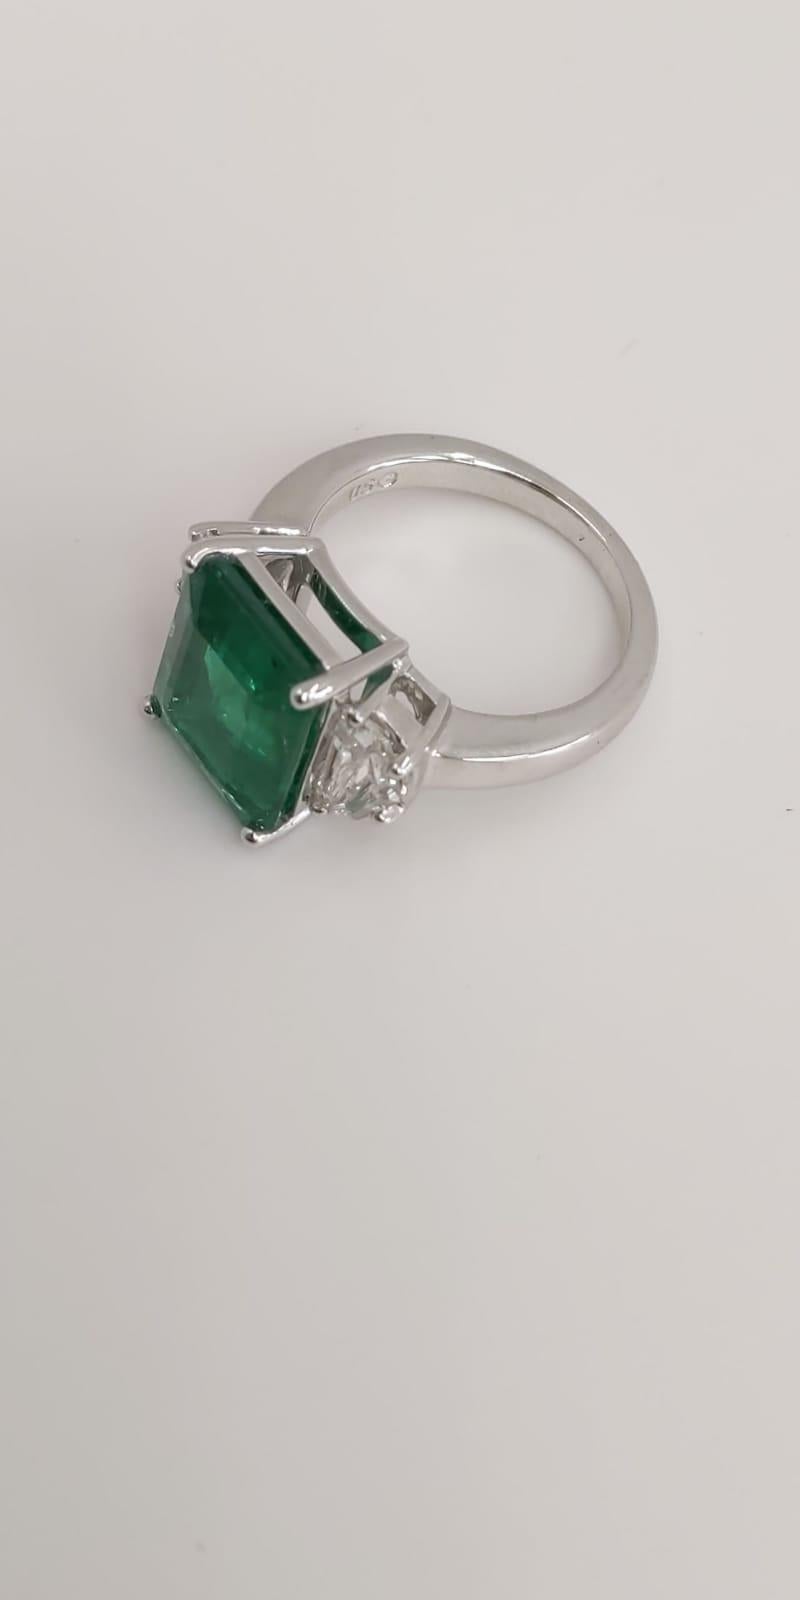 18 Karat White Gold Emerald Cut Emerald and Diamond Three Stone Ring
6.77 Carats of Emeralds
0.92 Carats of Diamonds
18 Karat White Gold 
Emerald Cut
Three Stone Ring